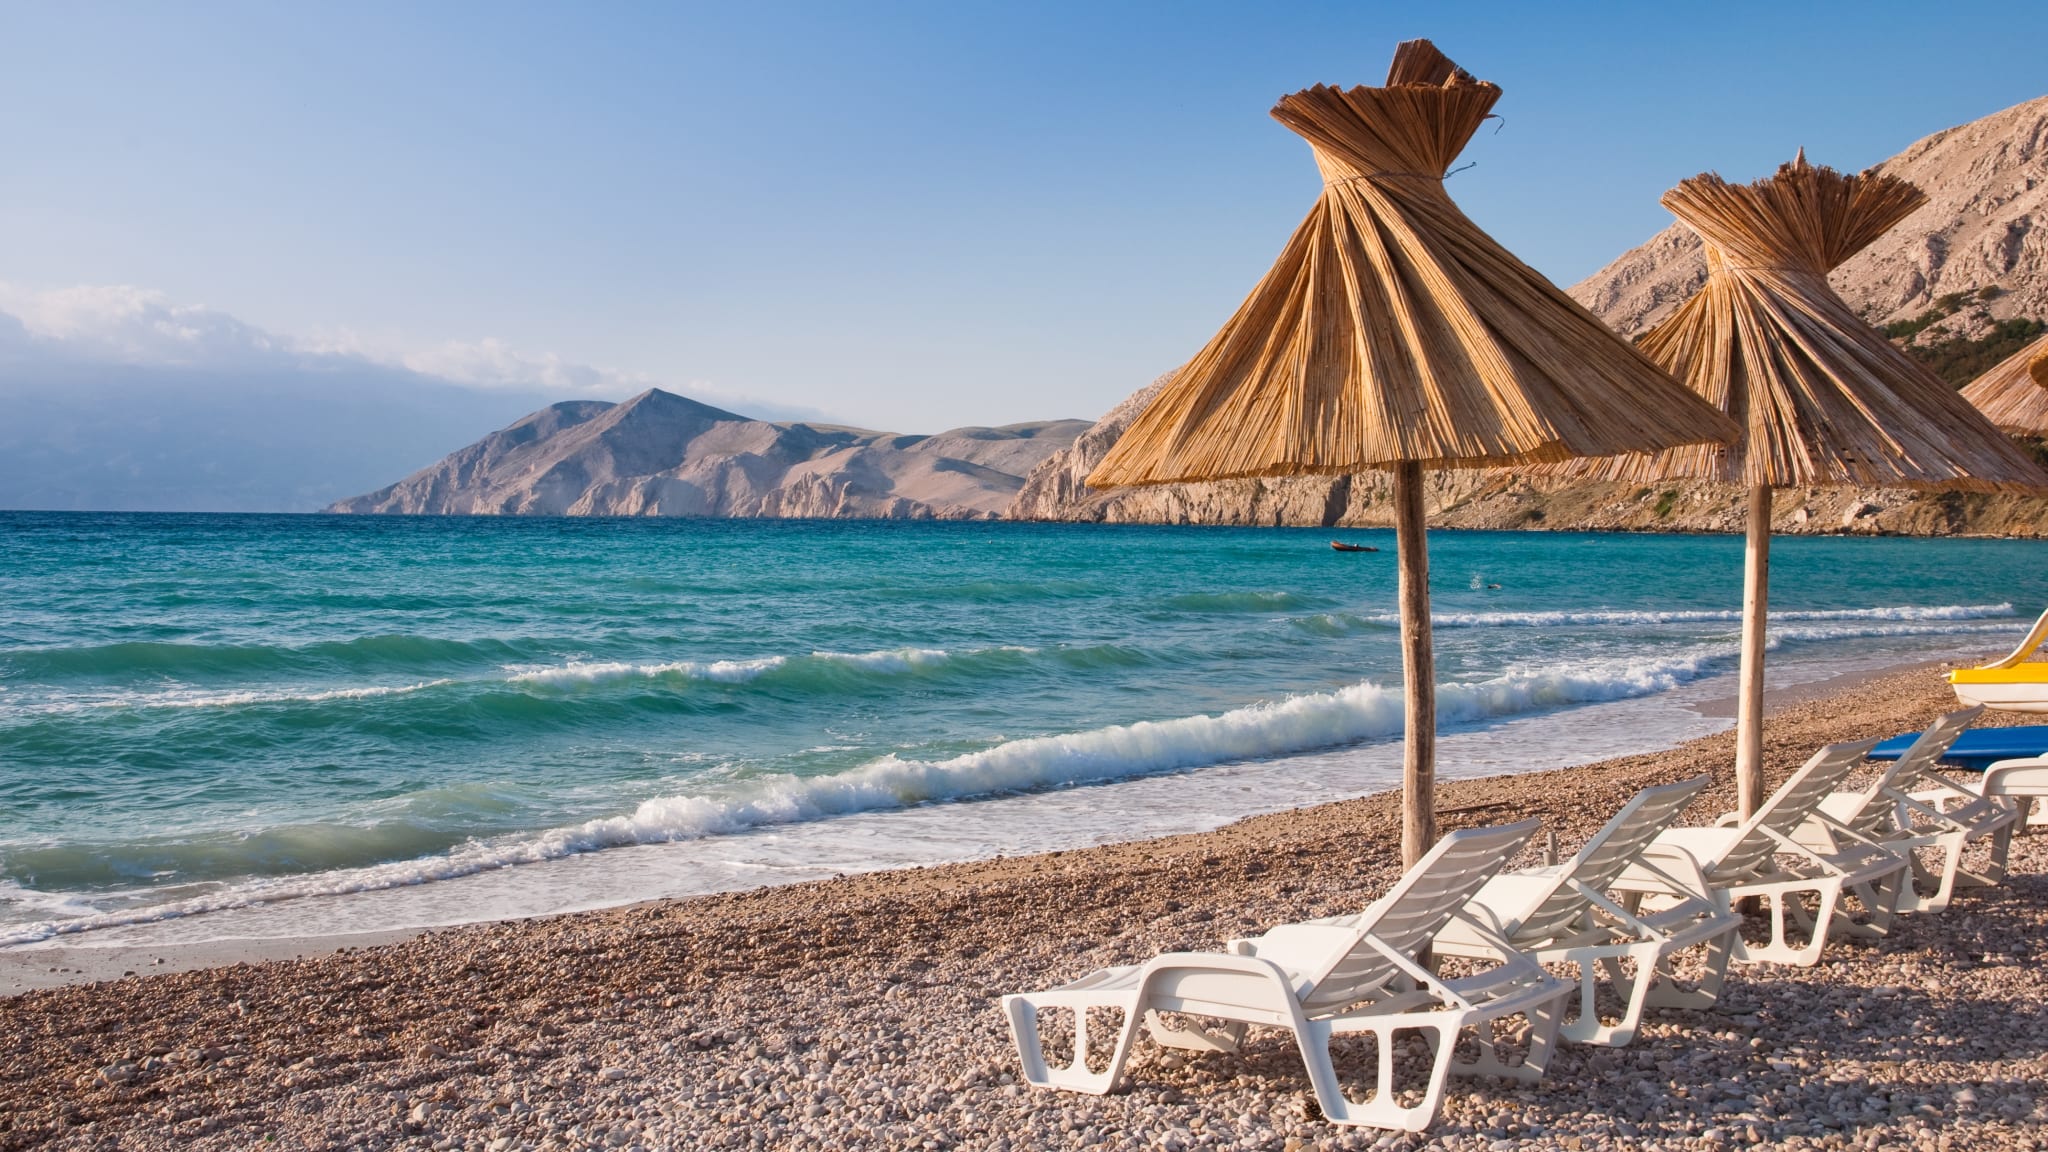 Sunshade and deck chair on beach at Baska in Krk - Croatia